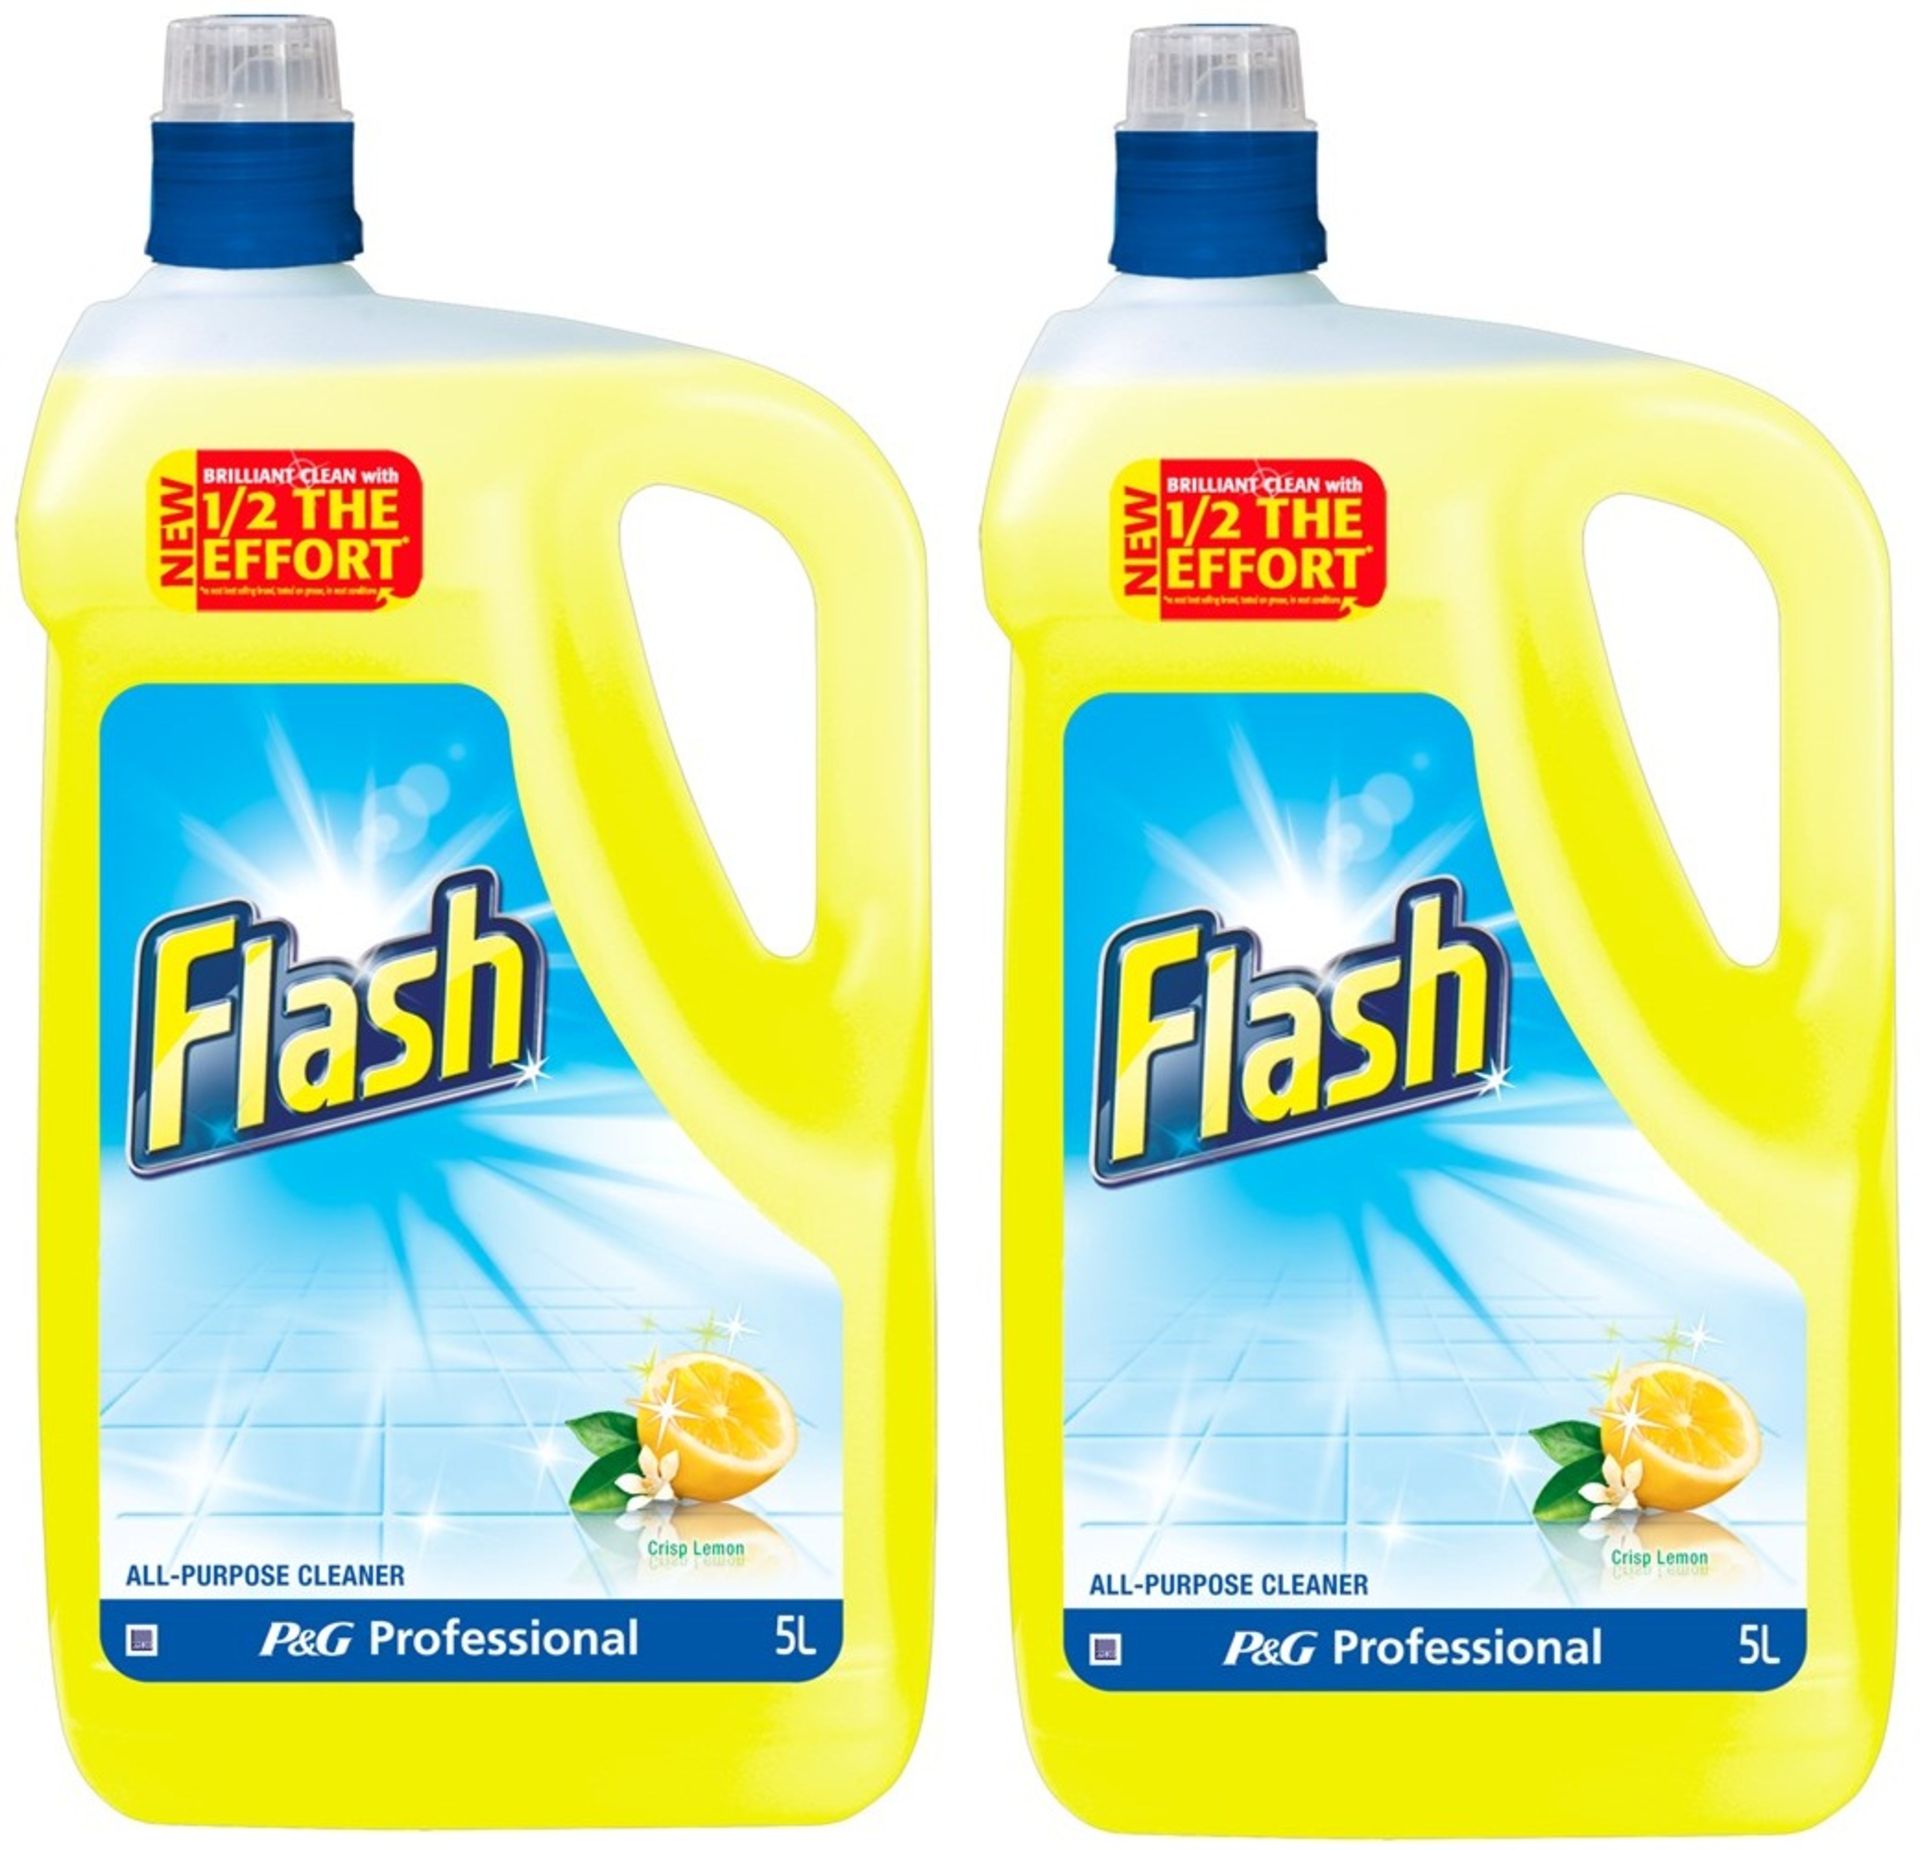 V Brand New 10 Litres Flash All Purpose Cleaner Lemon eBay Price £29.72 X 2 YOUR BID PRICE TO BE